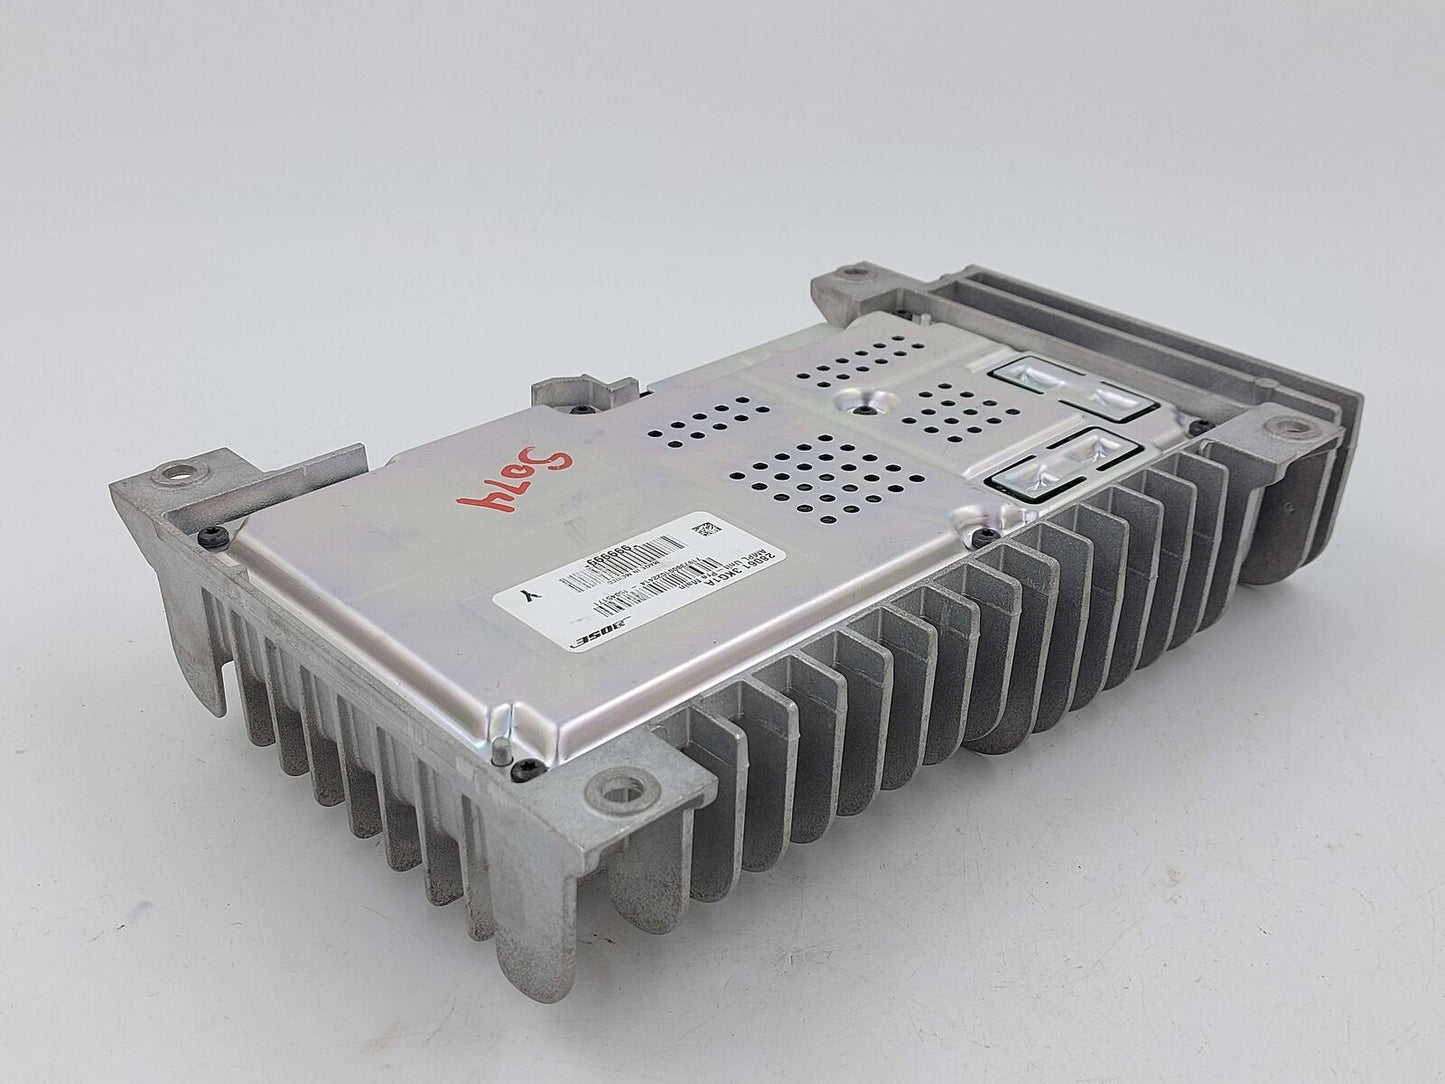 15-20 Nissan Pathfinder 3.5L Bose Audio System Amp Amplifier 280613KG1A